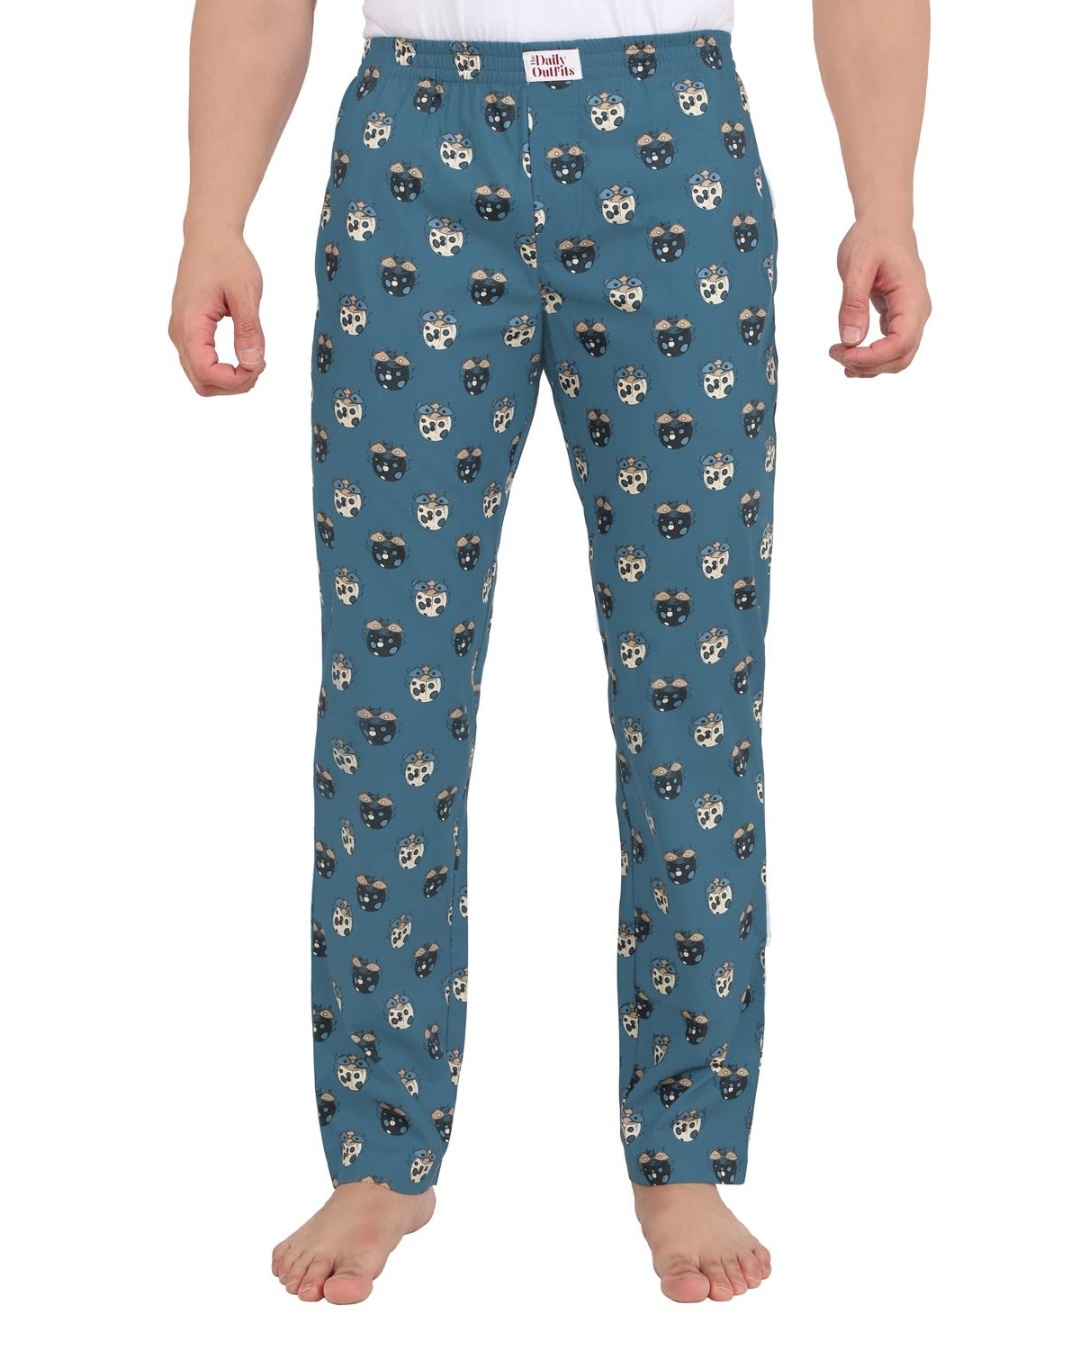 Buy Men's GreenCockrified Printed Pyjamas Online in India at Bewakoof